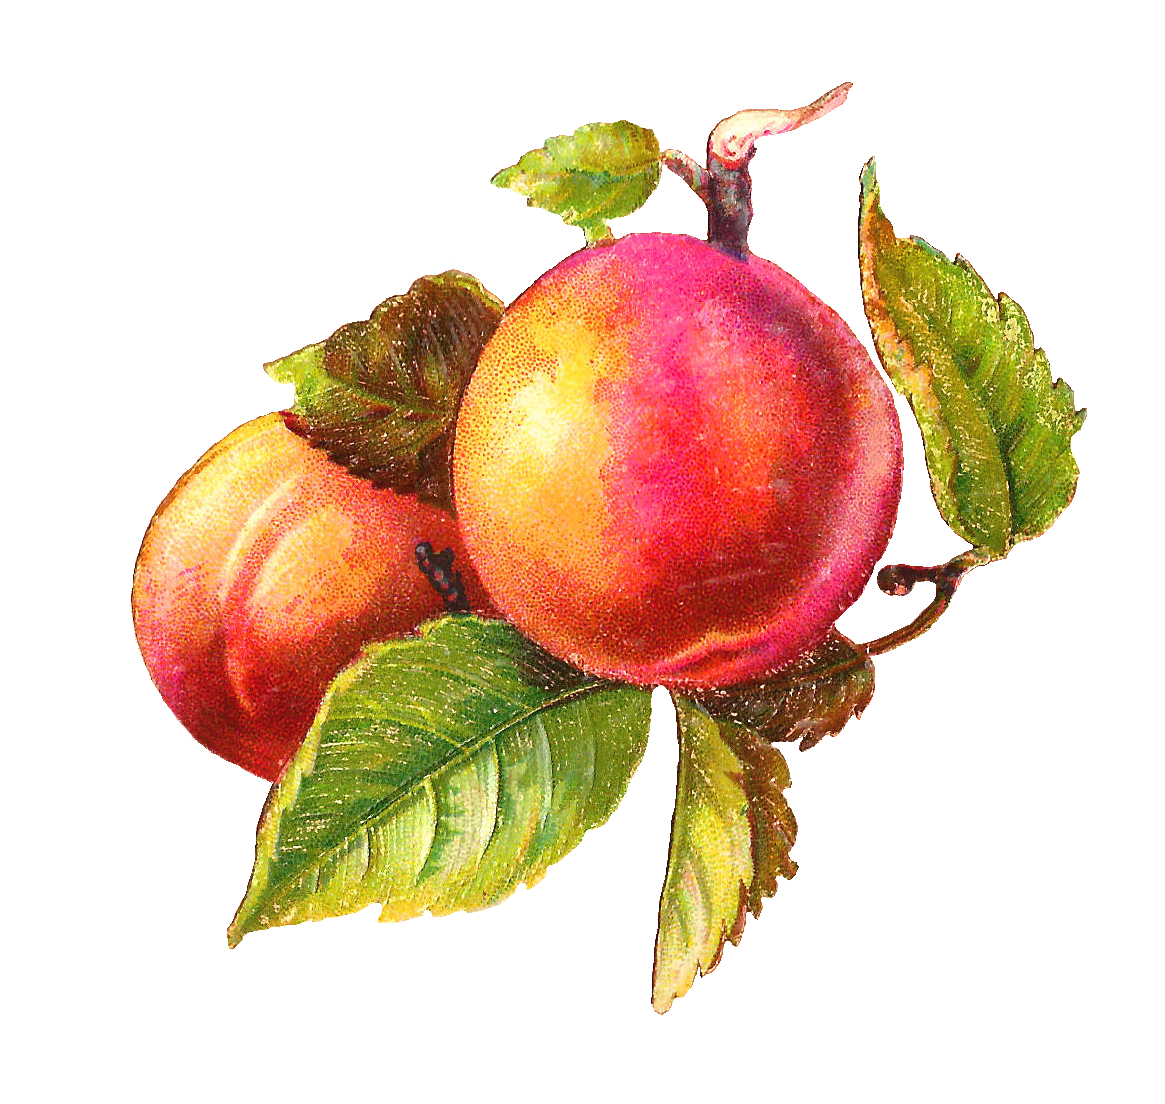 Antique Images: Free Fruit Clip Art: Antique Botanical Cherry and ...